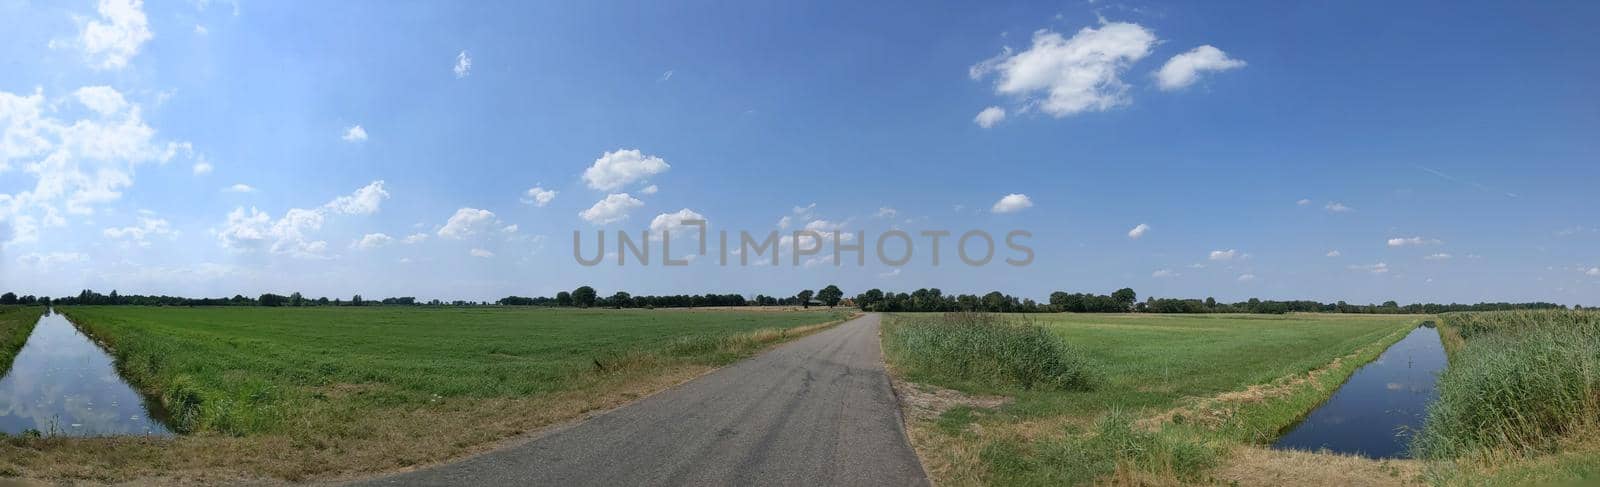 Panoramic farmland scenery around Paasloo, The Netherlands